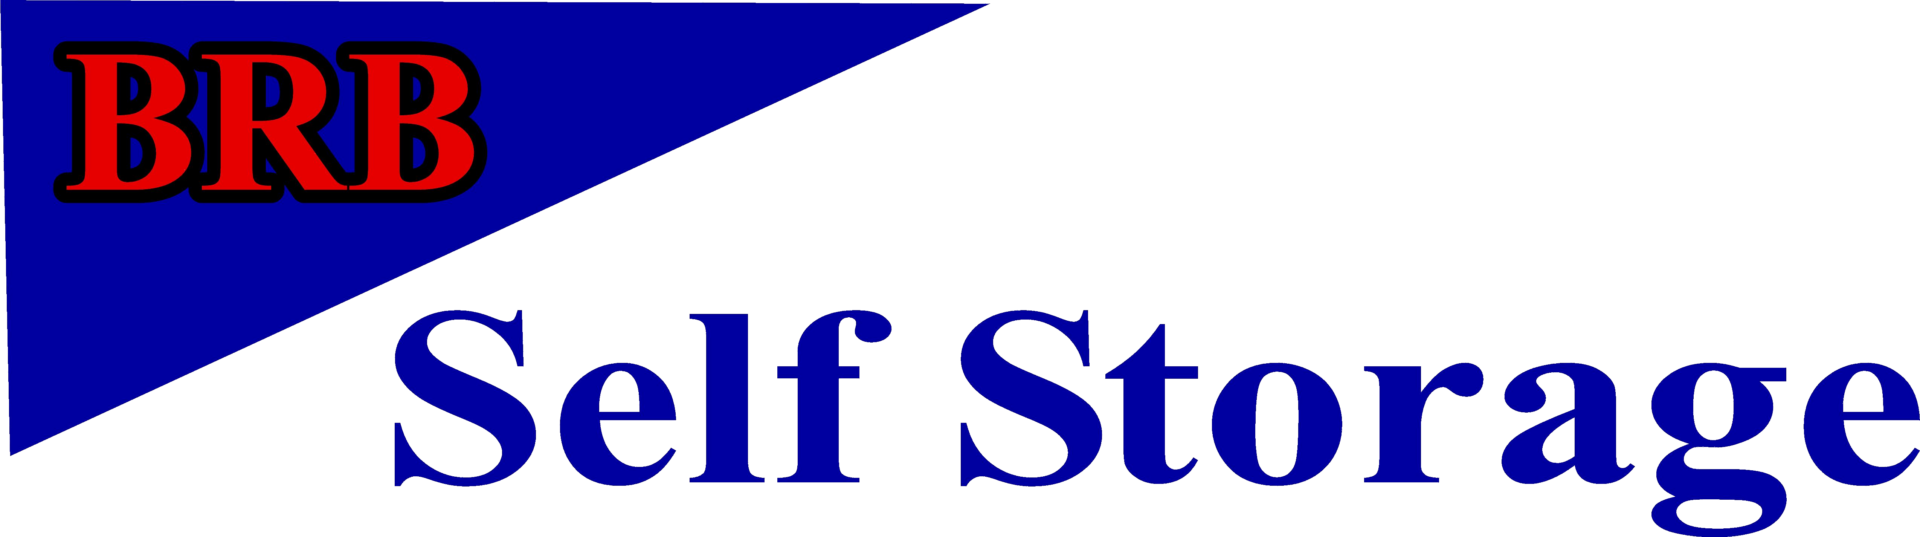 BRB Self Storage logo